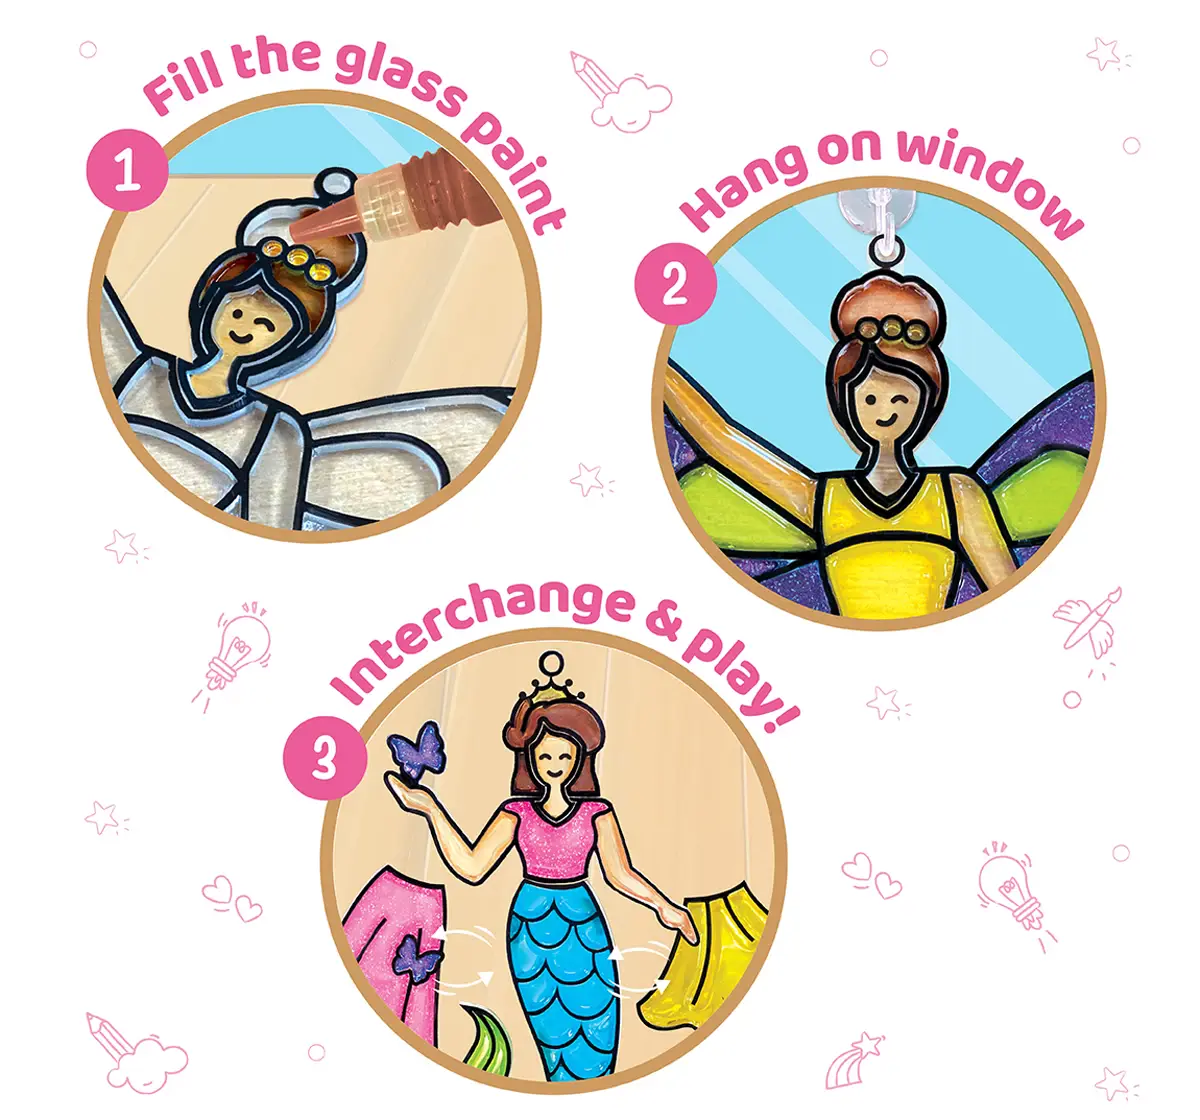 Imagimake Window Art Princess Glass Painting Craft Kit for kids 5Y+, Multicolour